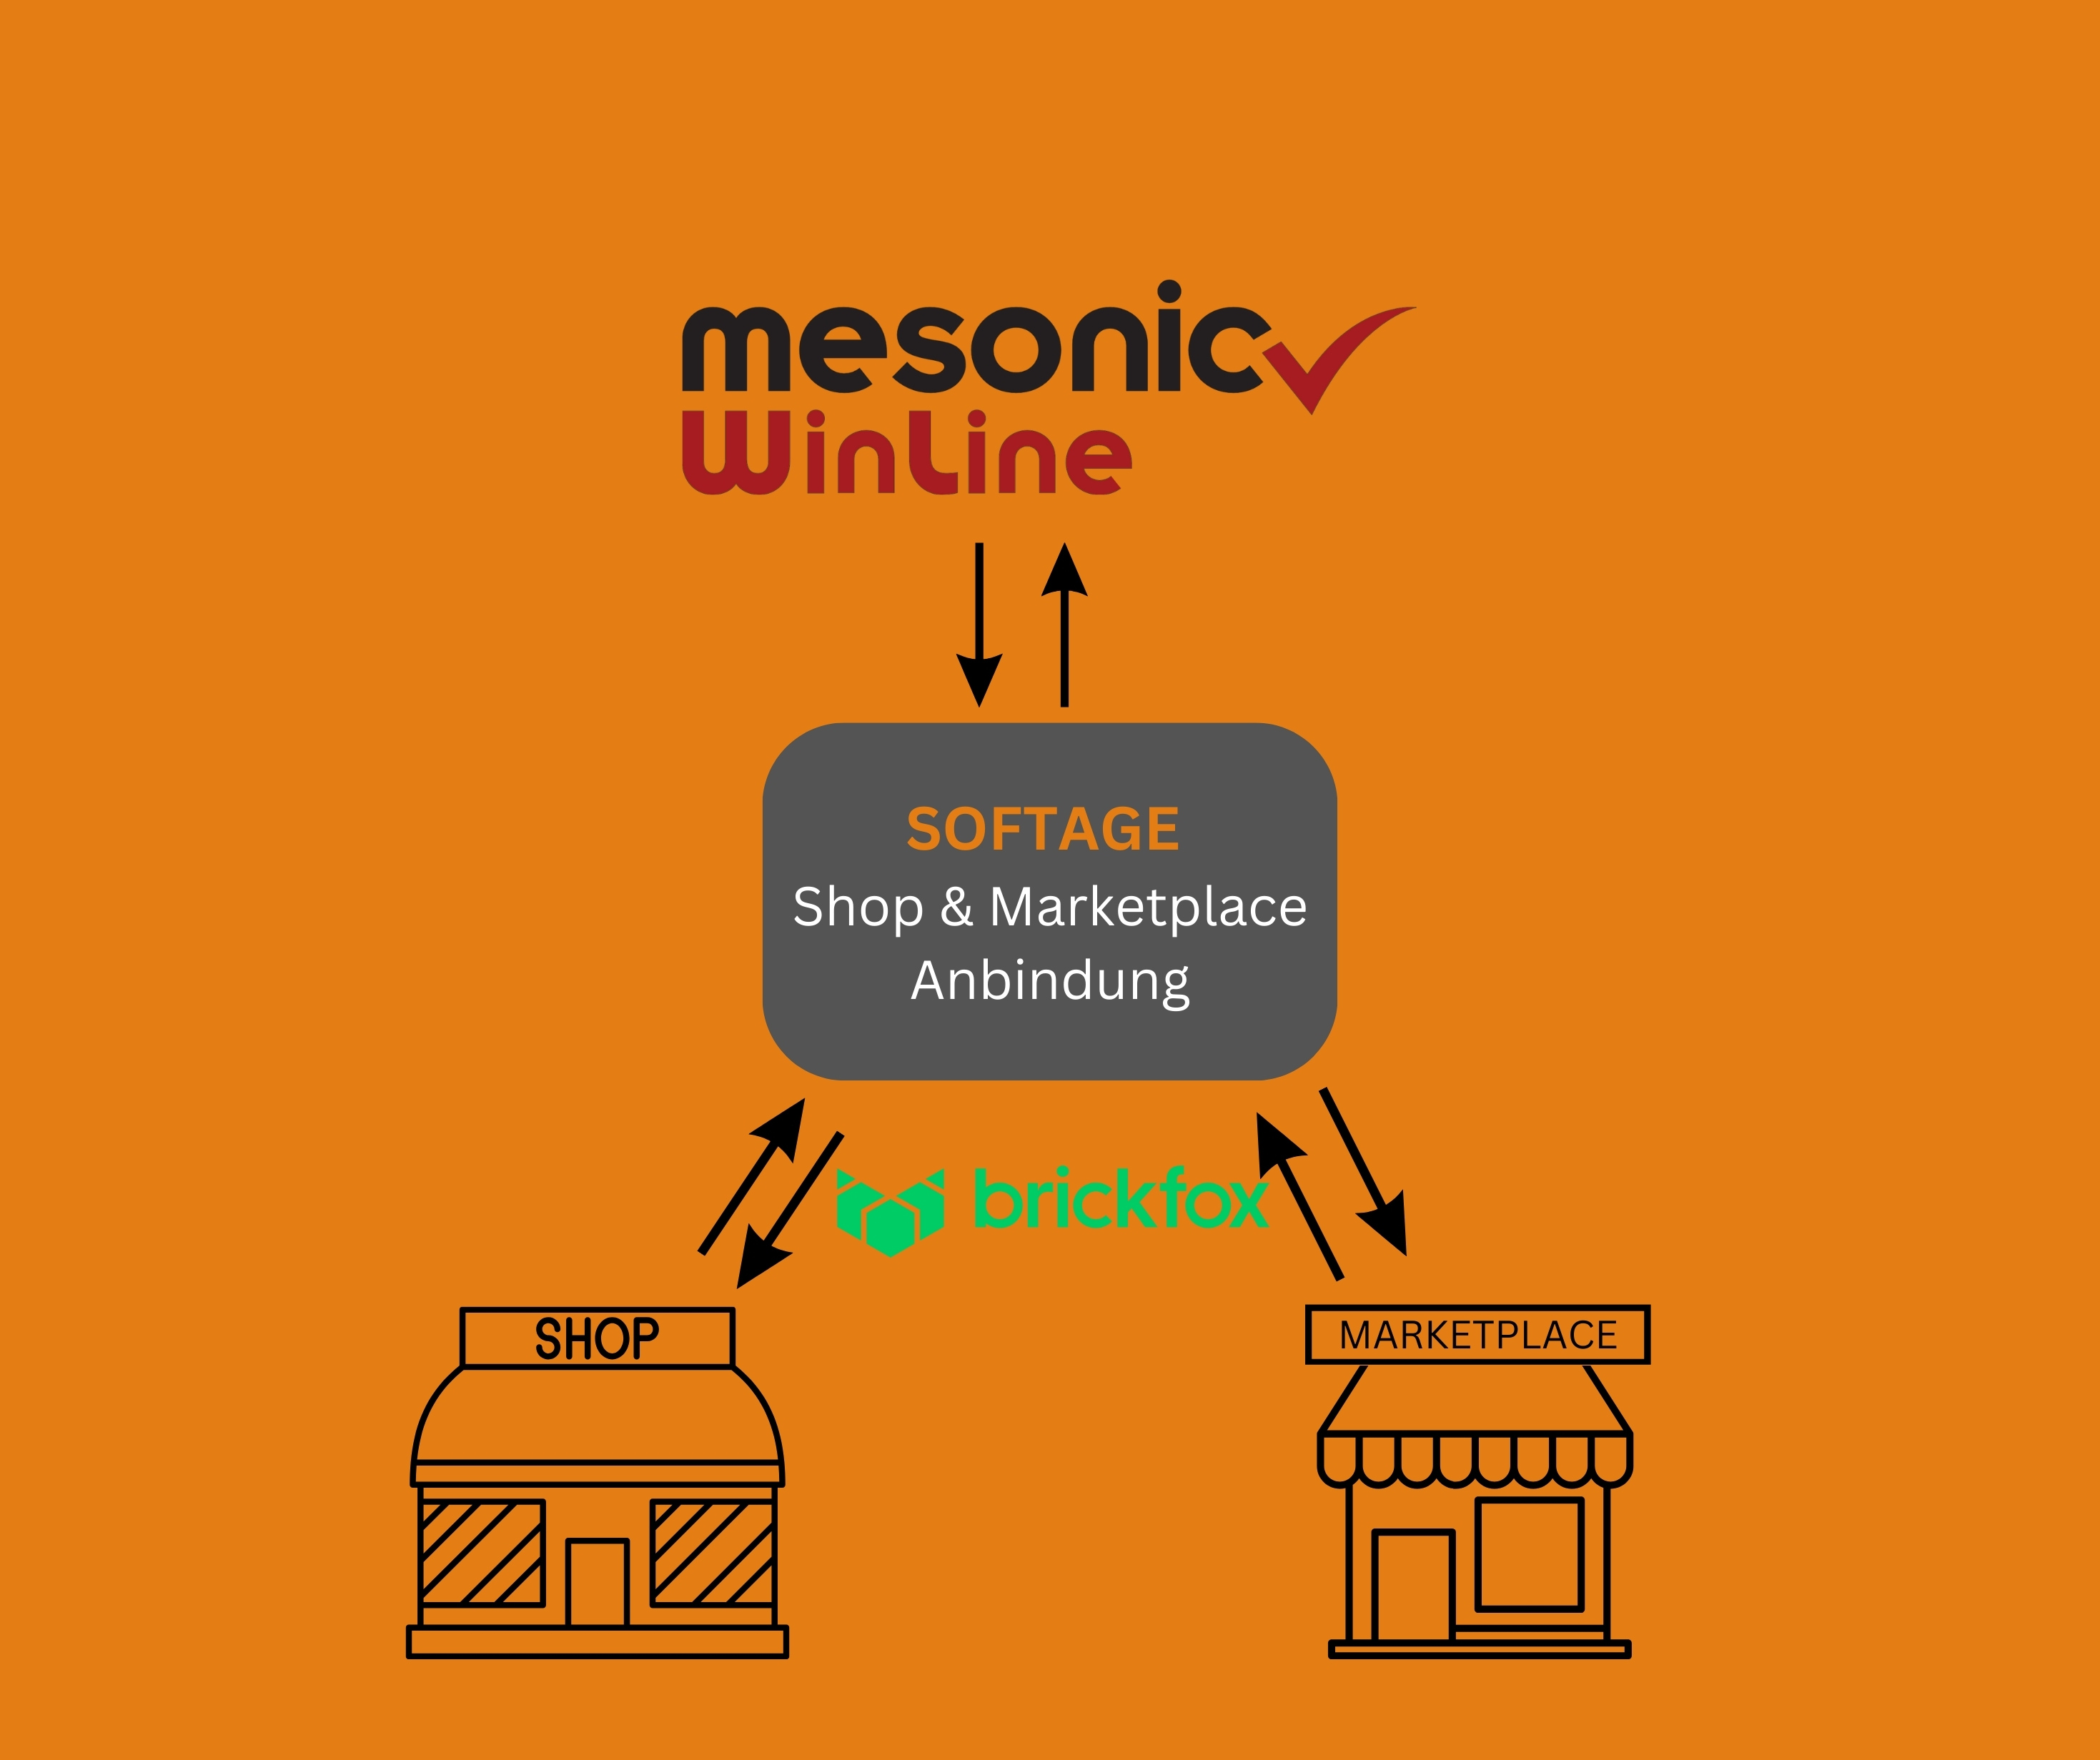 SOFTAGE und Brickfox - Shopware, Oxid, Magento Anbindung - Marketplace Conrad, Otto, Amazon, Ebay